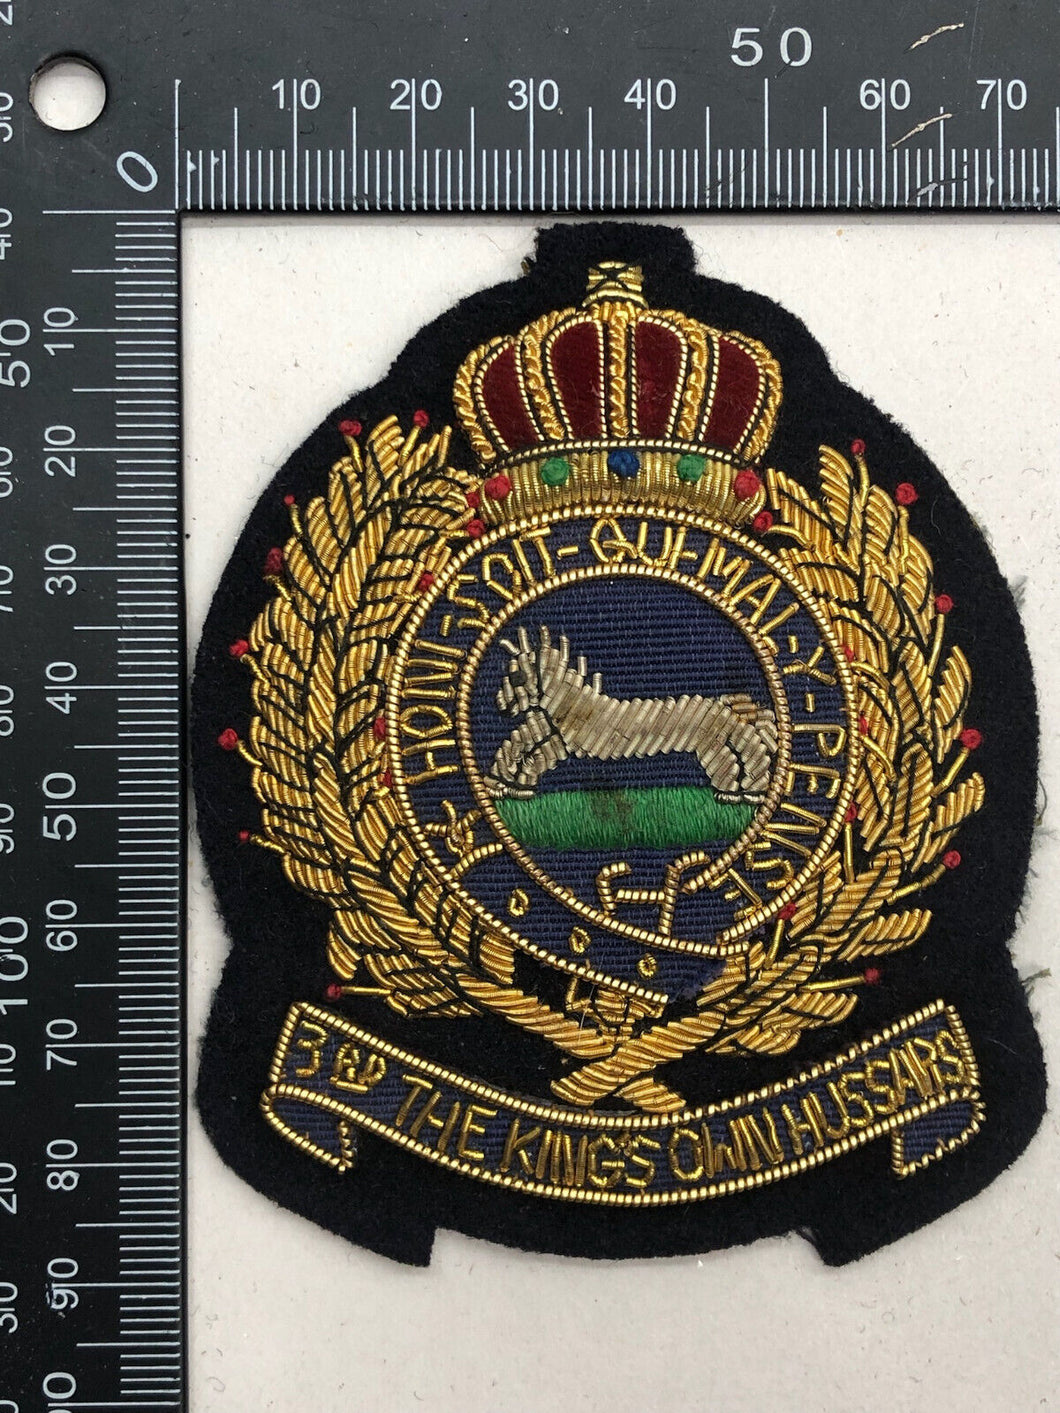 British Army Bullion Embroidered Blazer Badge - 3rd King's Own Hussars Regiment